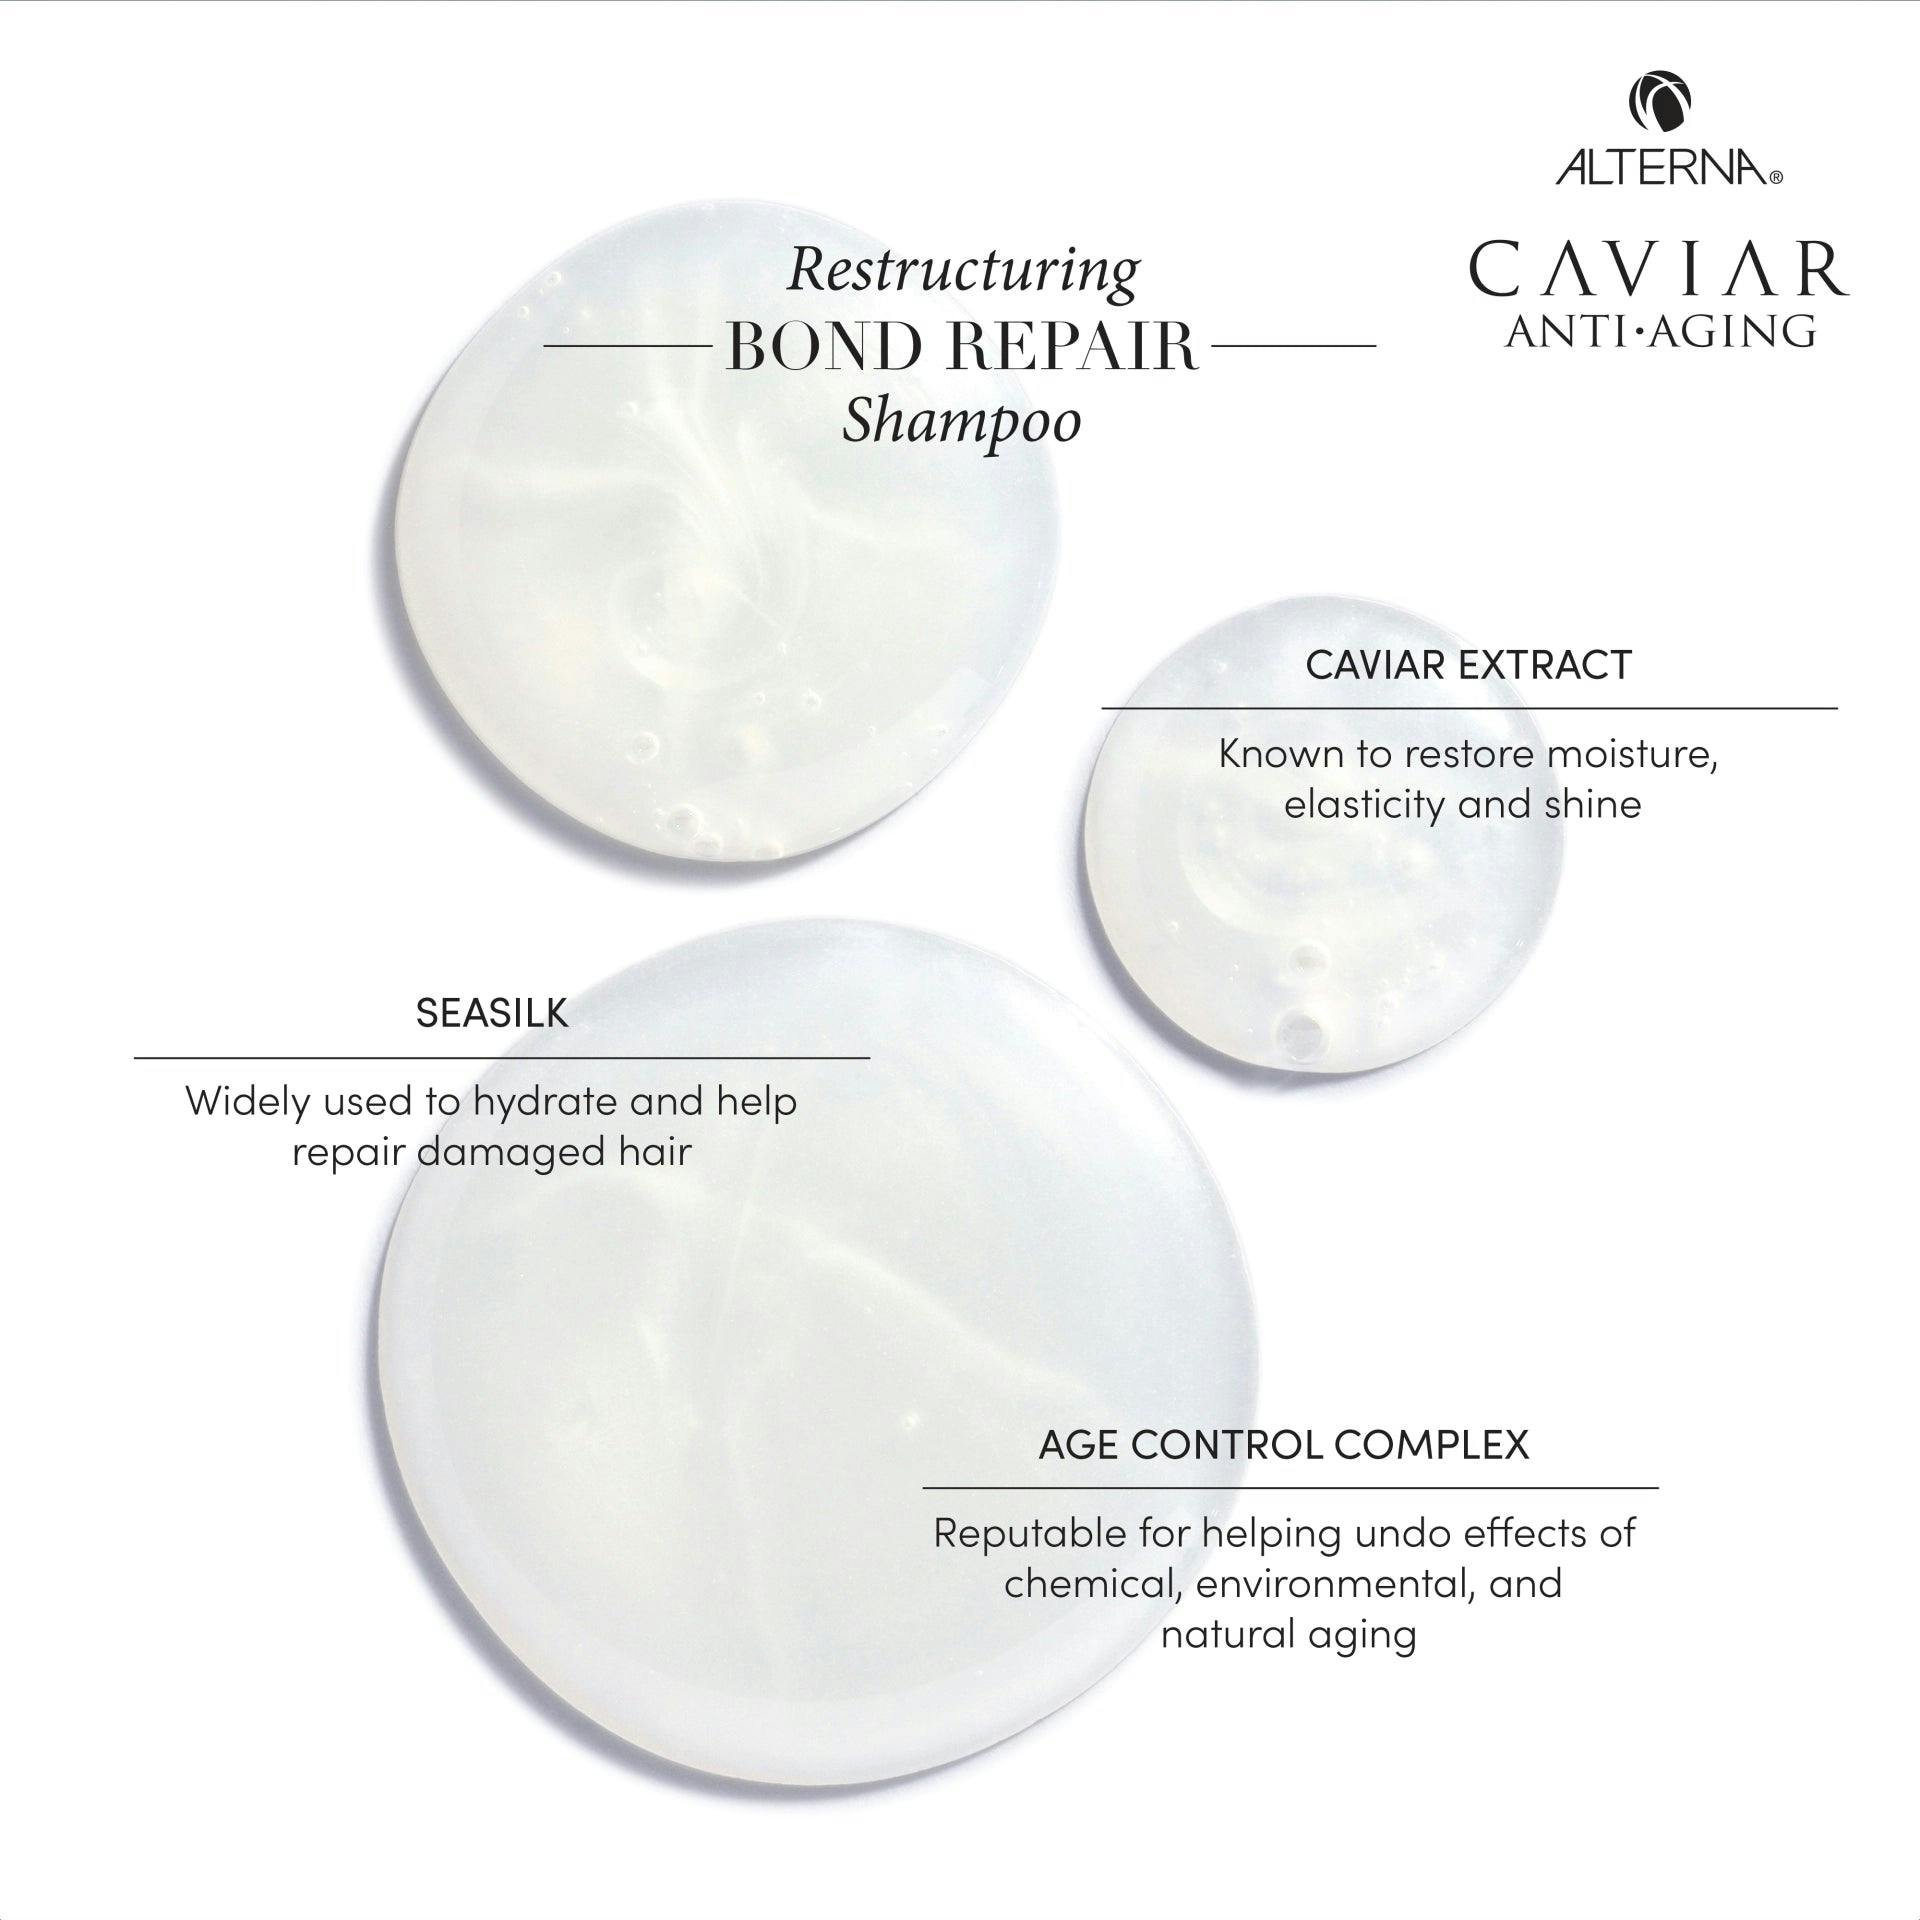 Alterna CAVIAR Anti-Aging Restructuring Bond Repair Shampoo 250mL